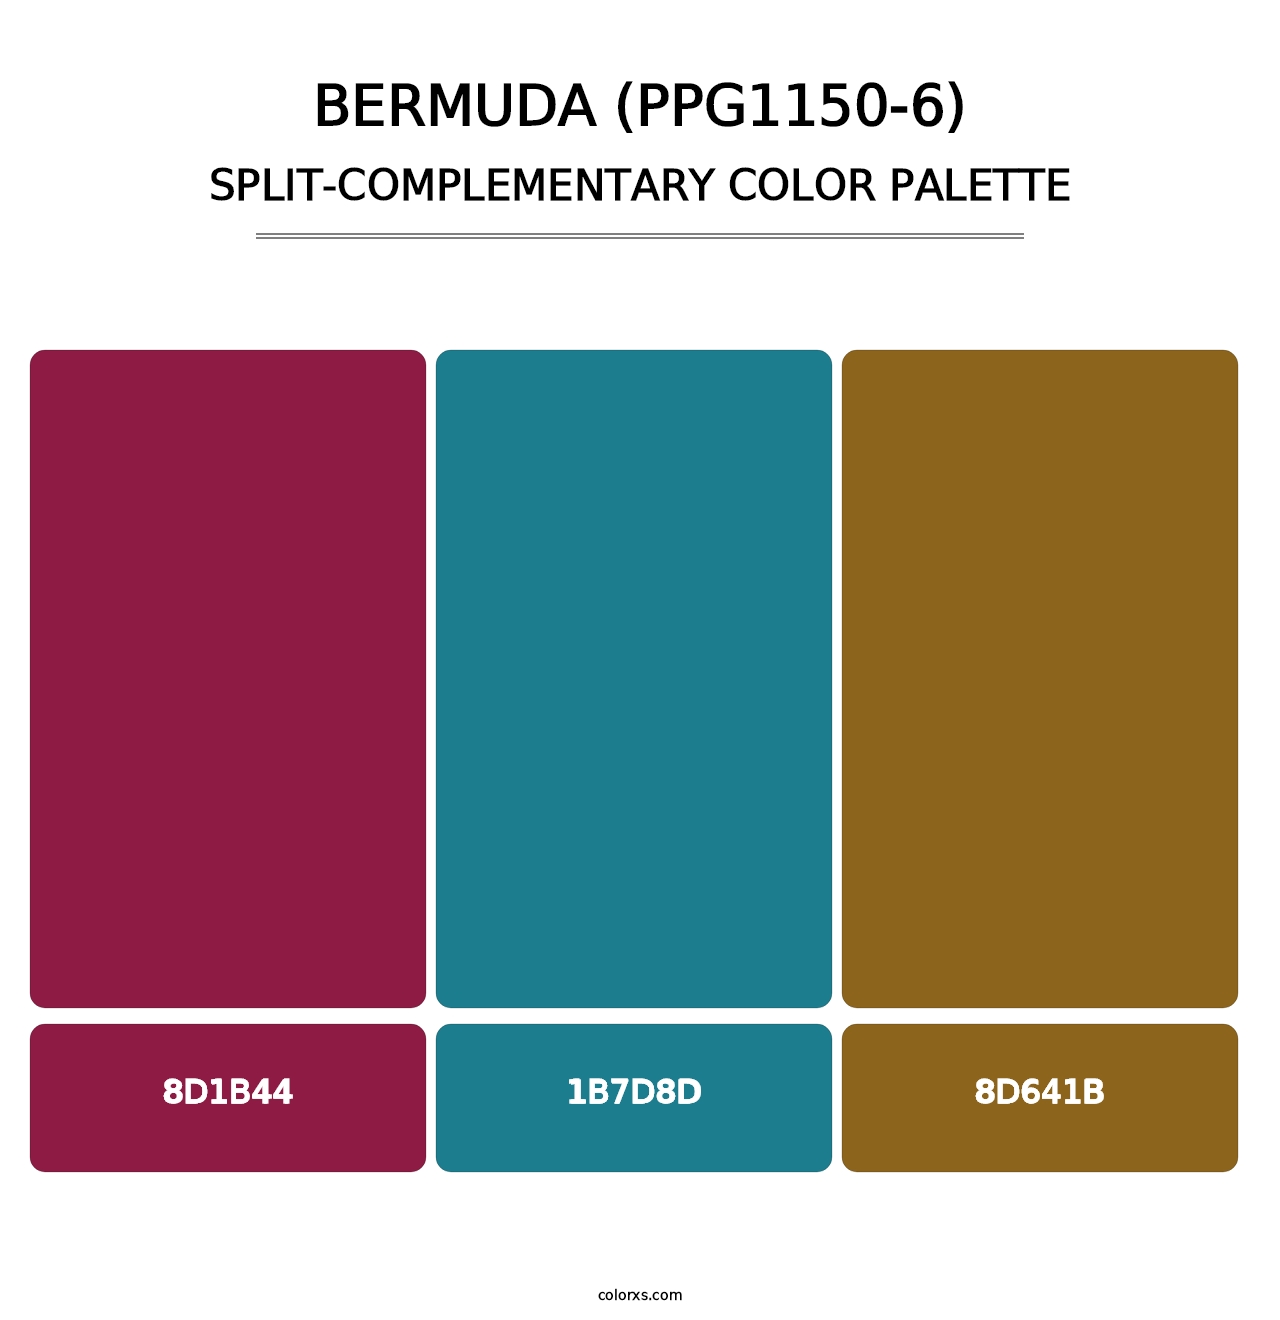 Bermuda (PPG1150-6) - Split-Complementary Color Palette